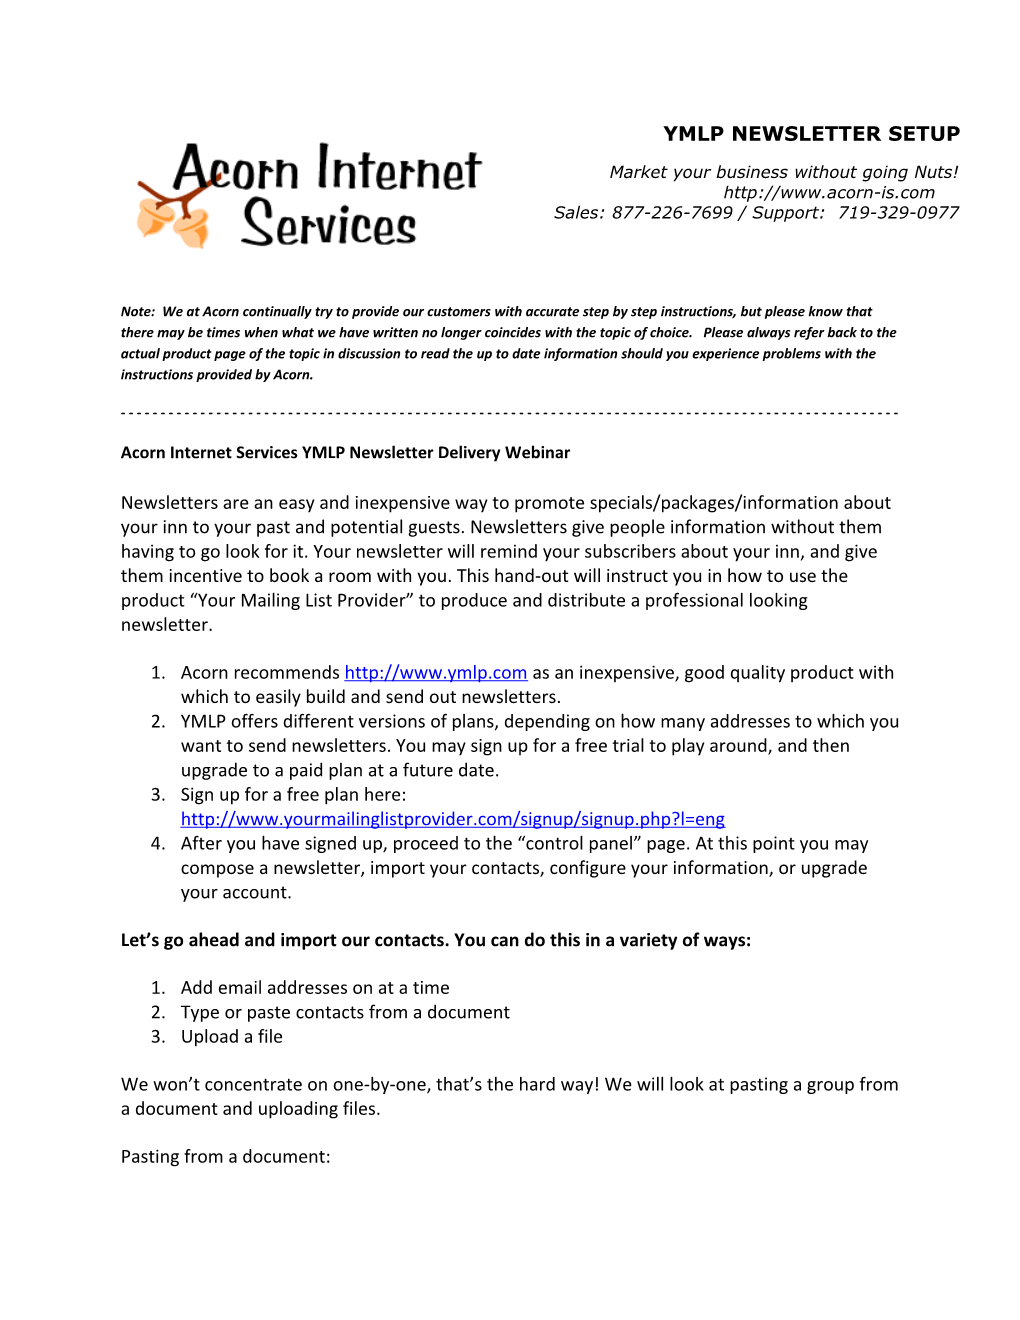 Acorn Internet Services YMLP Newsletter Delivery Webinar